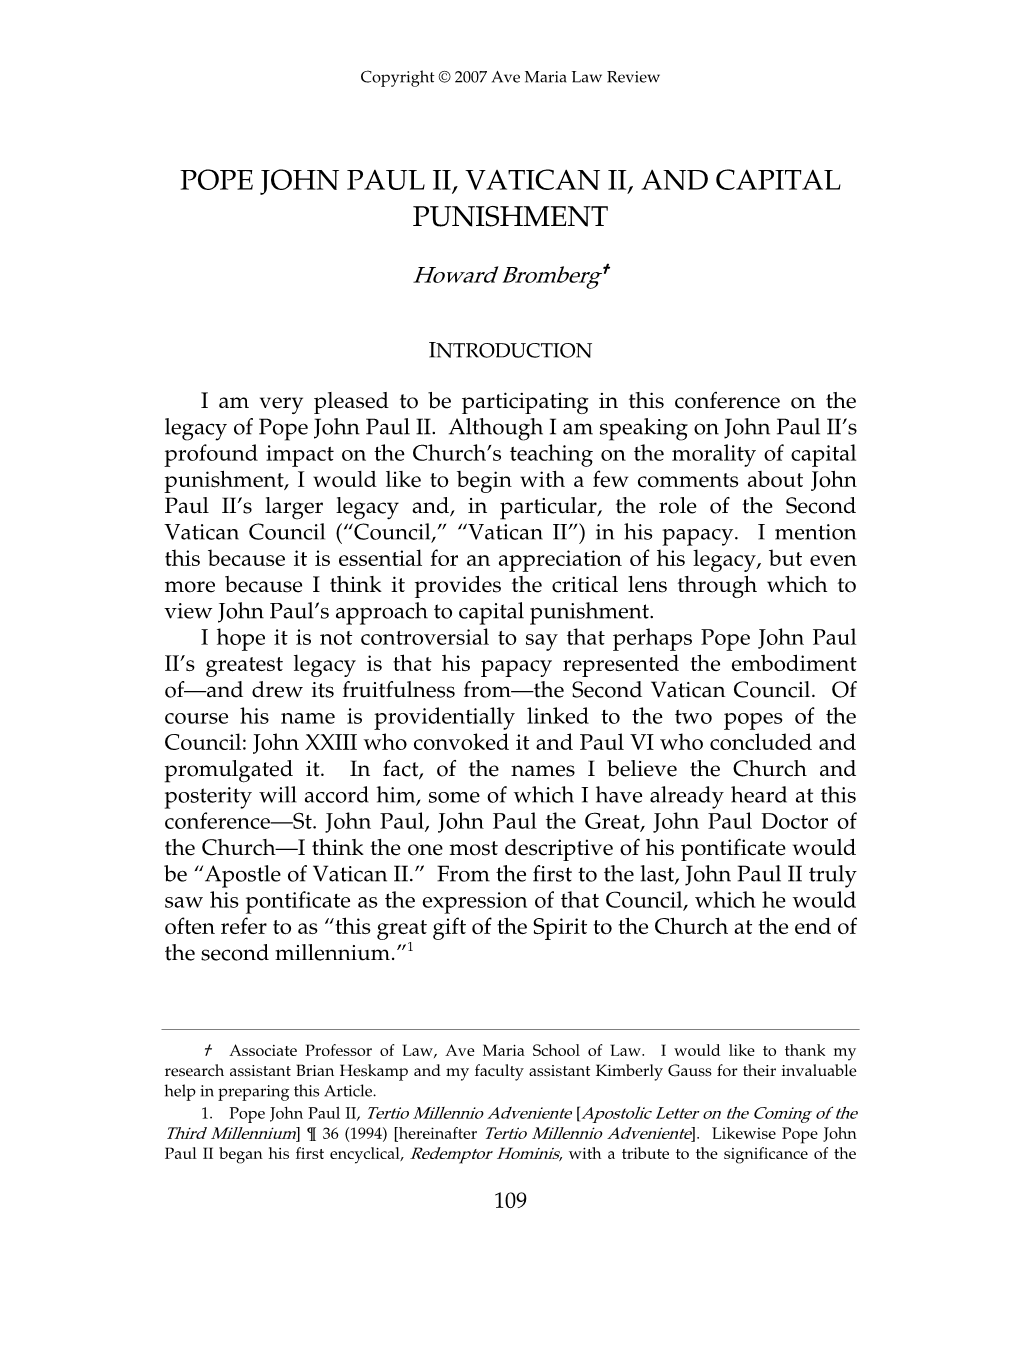 Pope John Paul Ii, Vatican Ii, and Capital Punishment